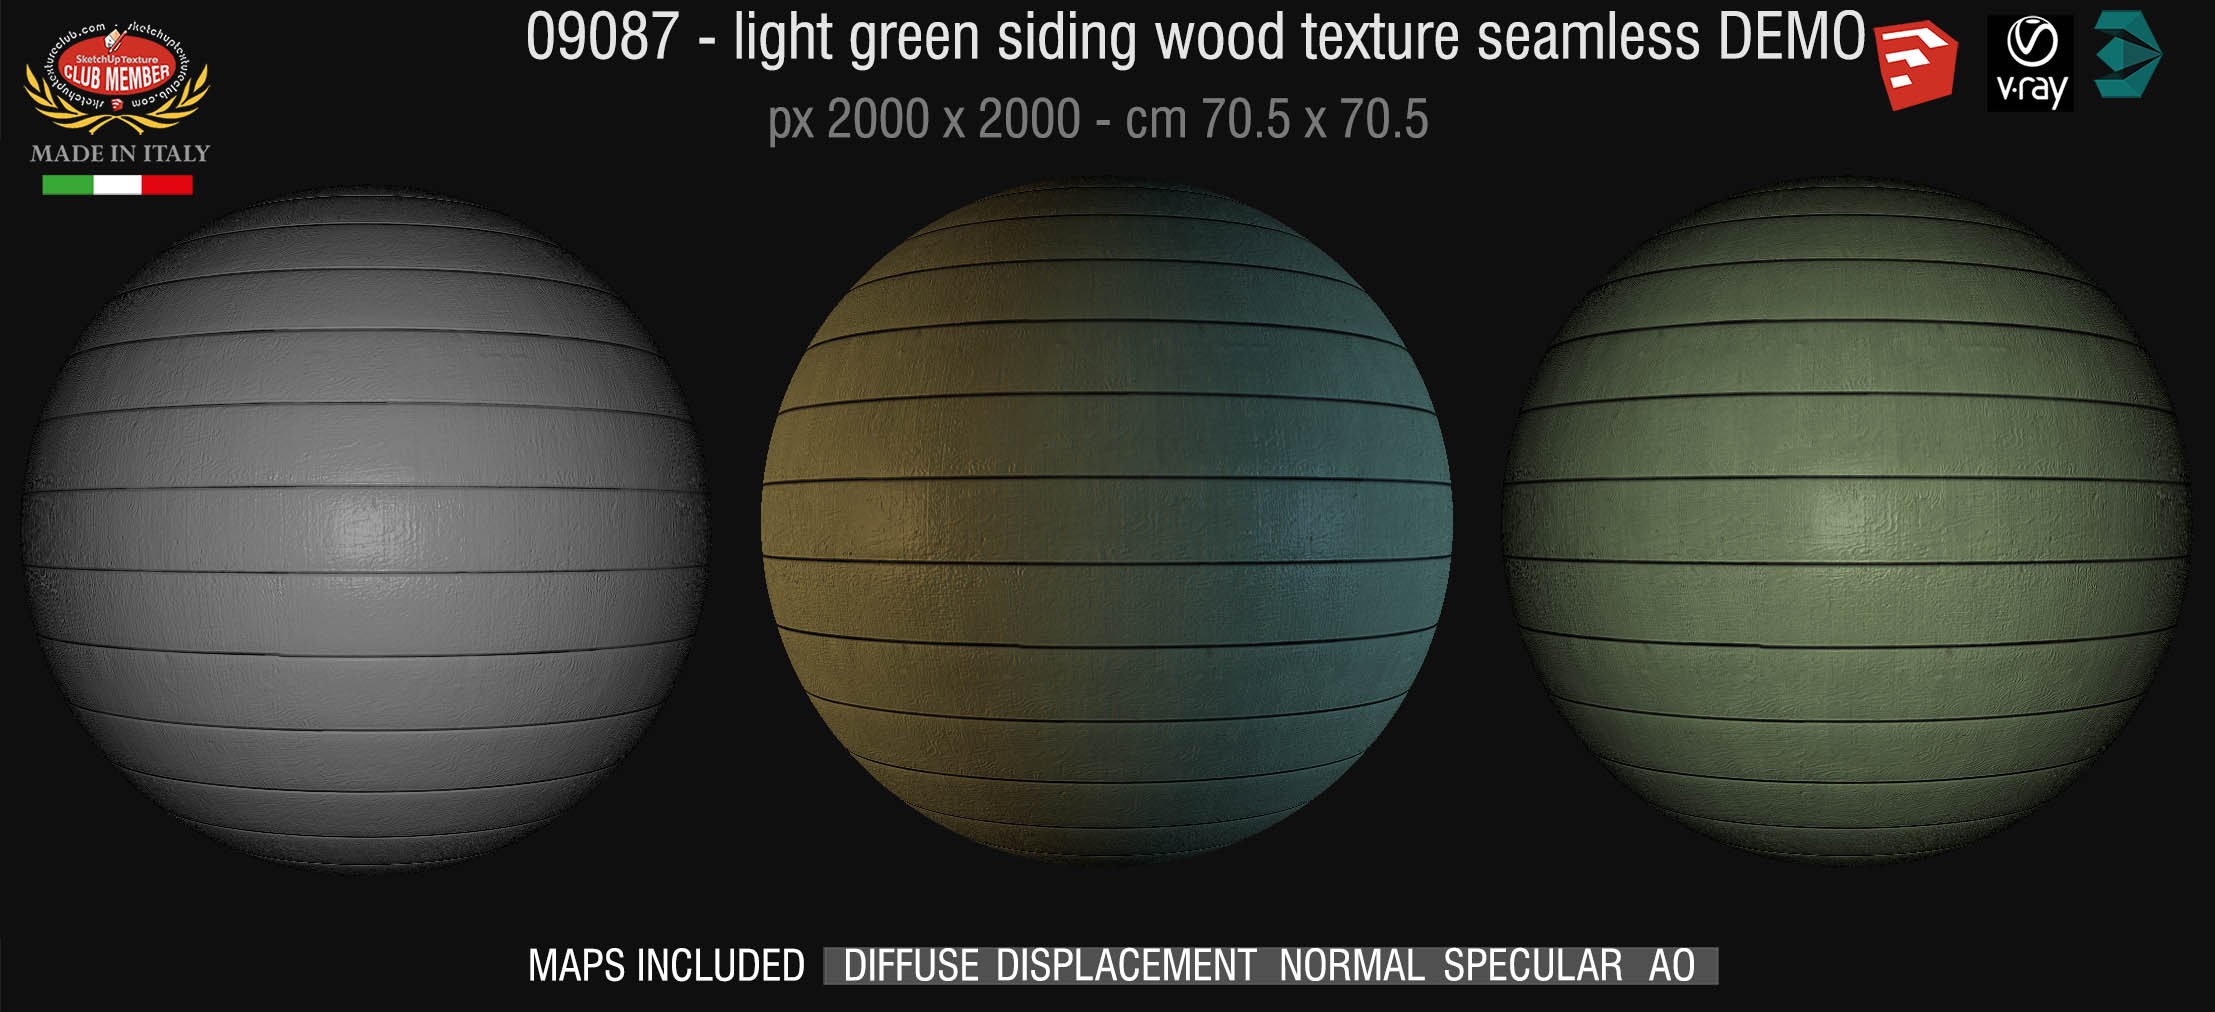 09087 HR Light green siding wood texture + maps DEMO